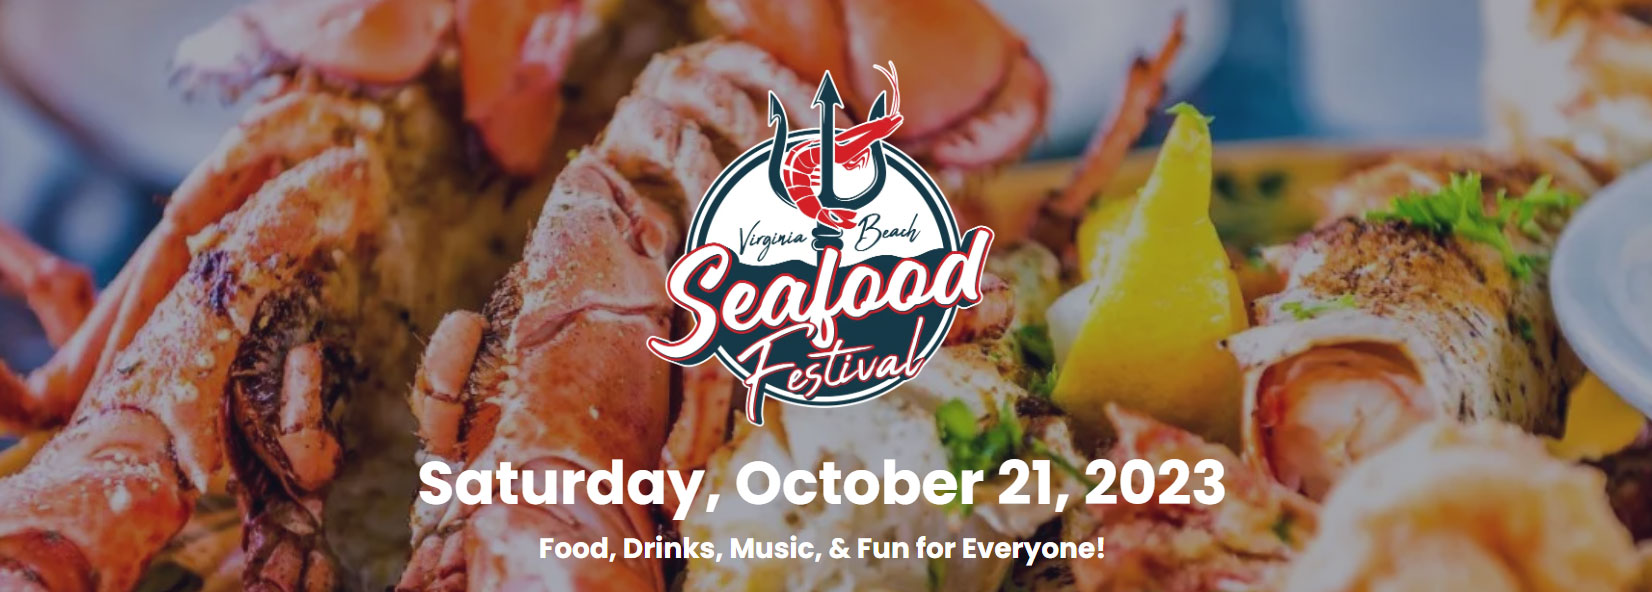 2nd Annual Virginia Beach Seafood Festival The Coast